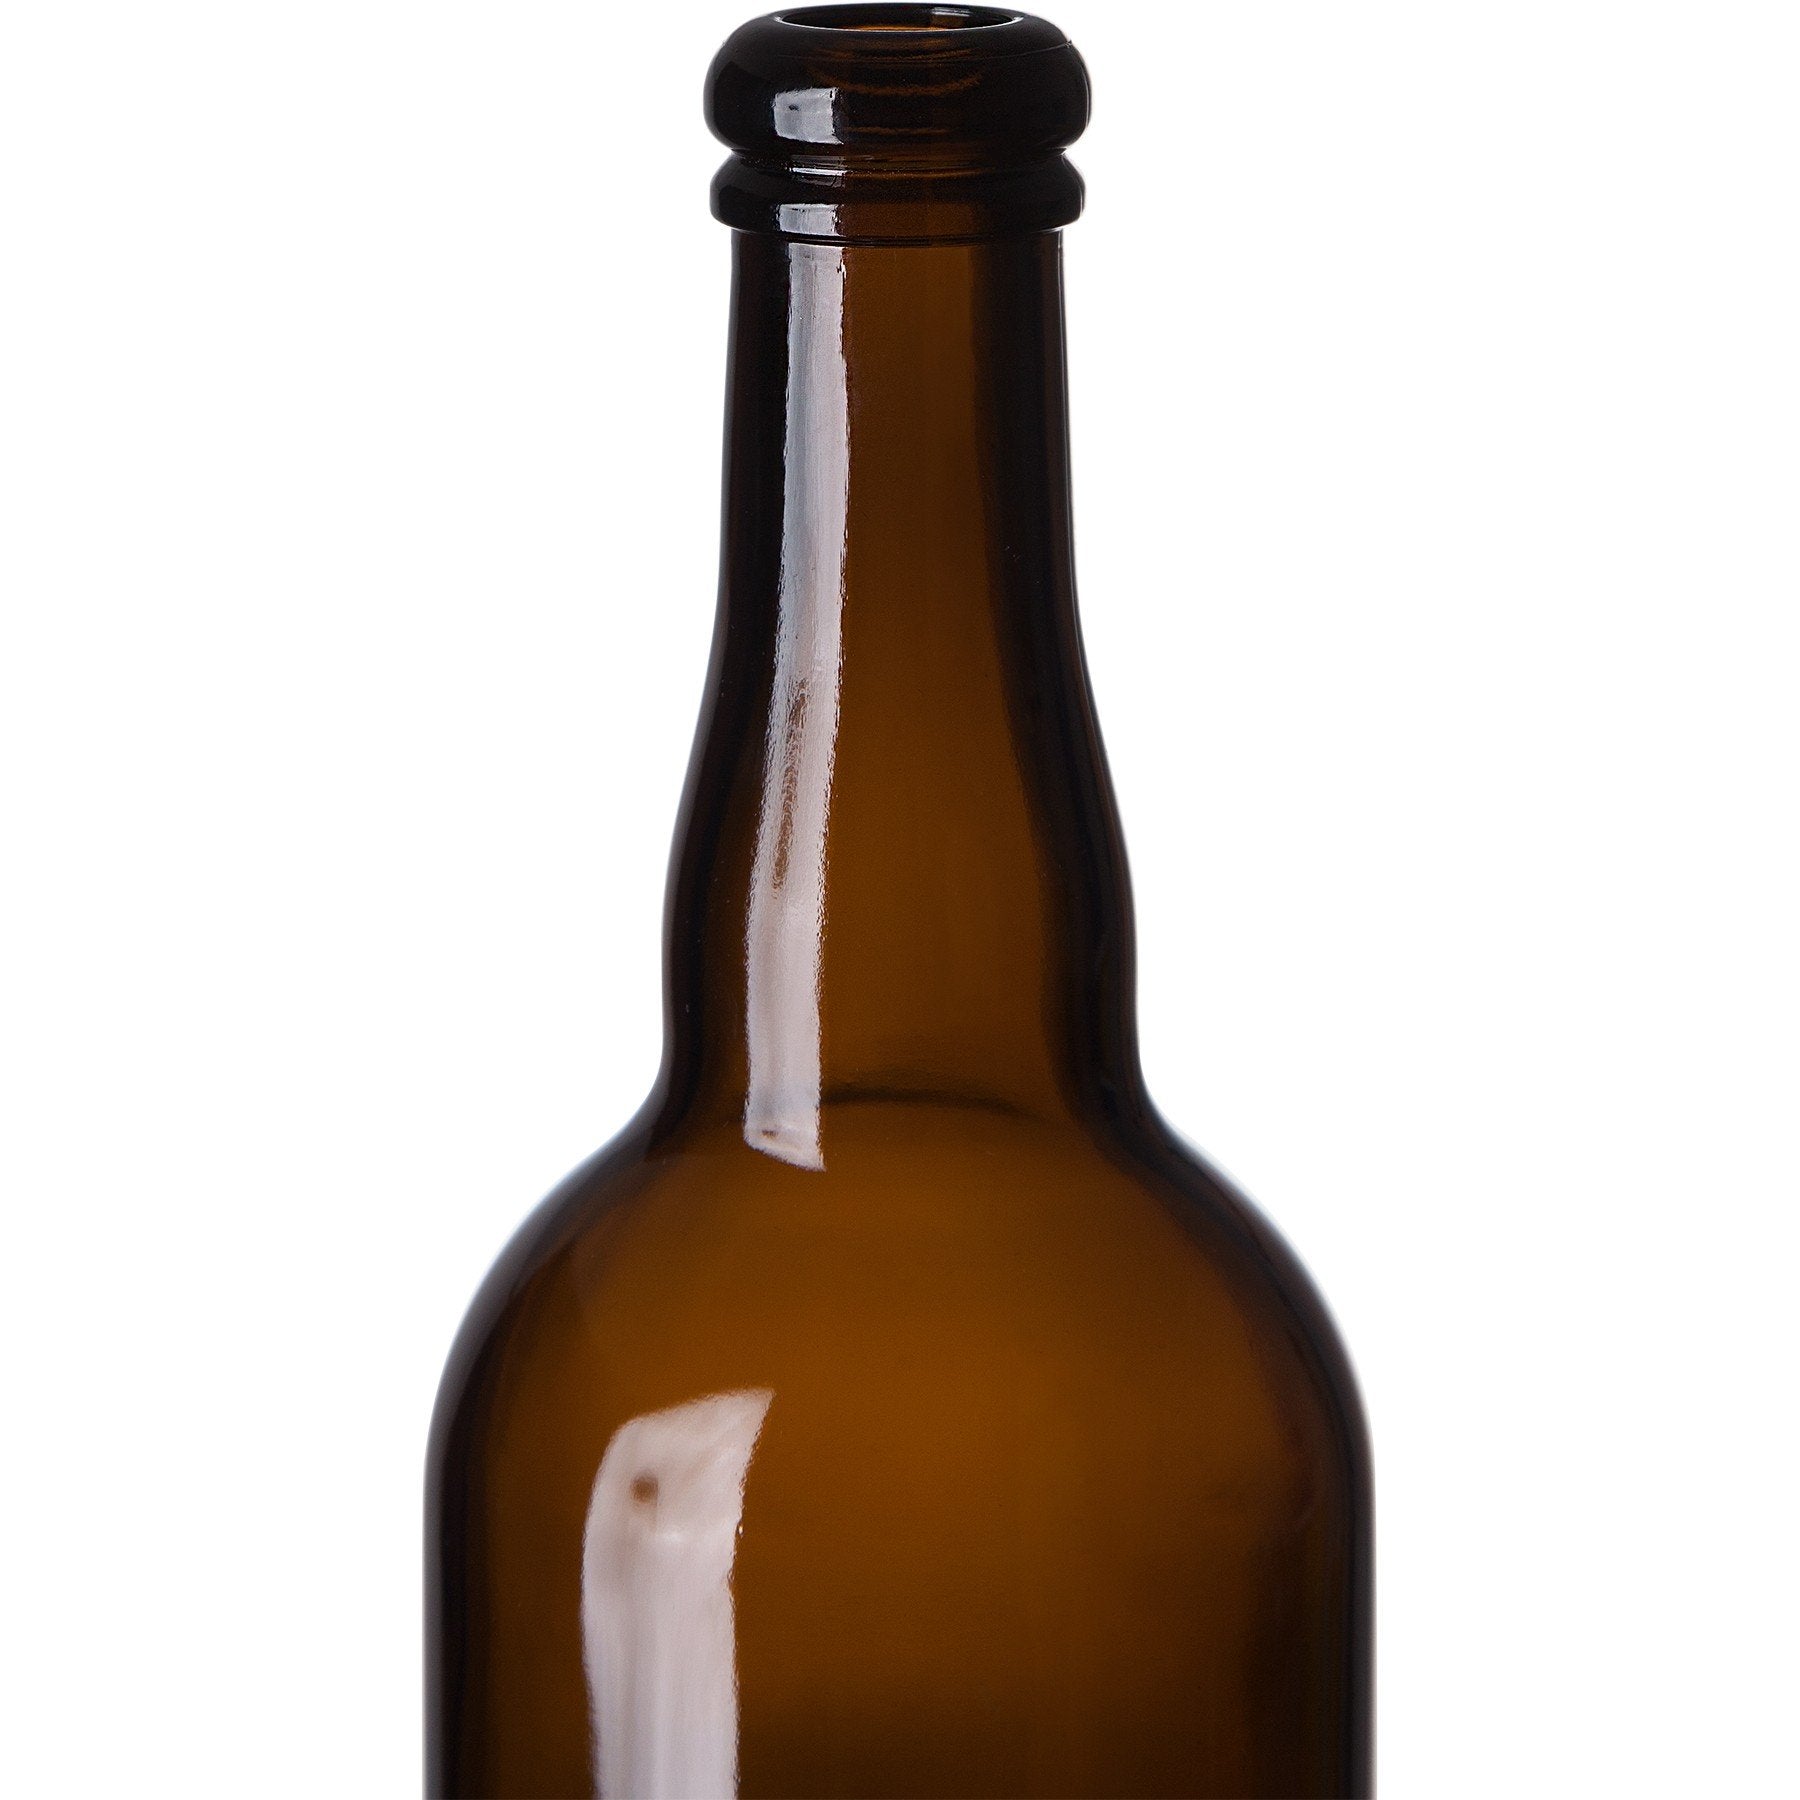 Belgian Beer Bottles - 750 ml, Amber - Case of 12